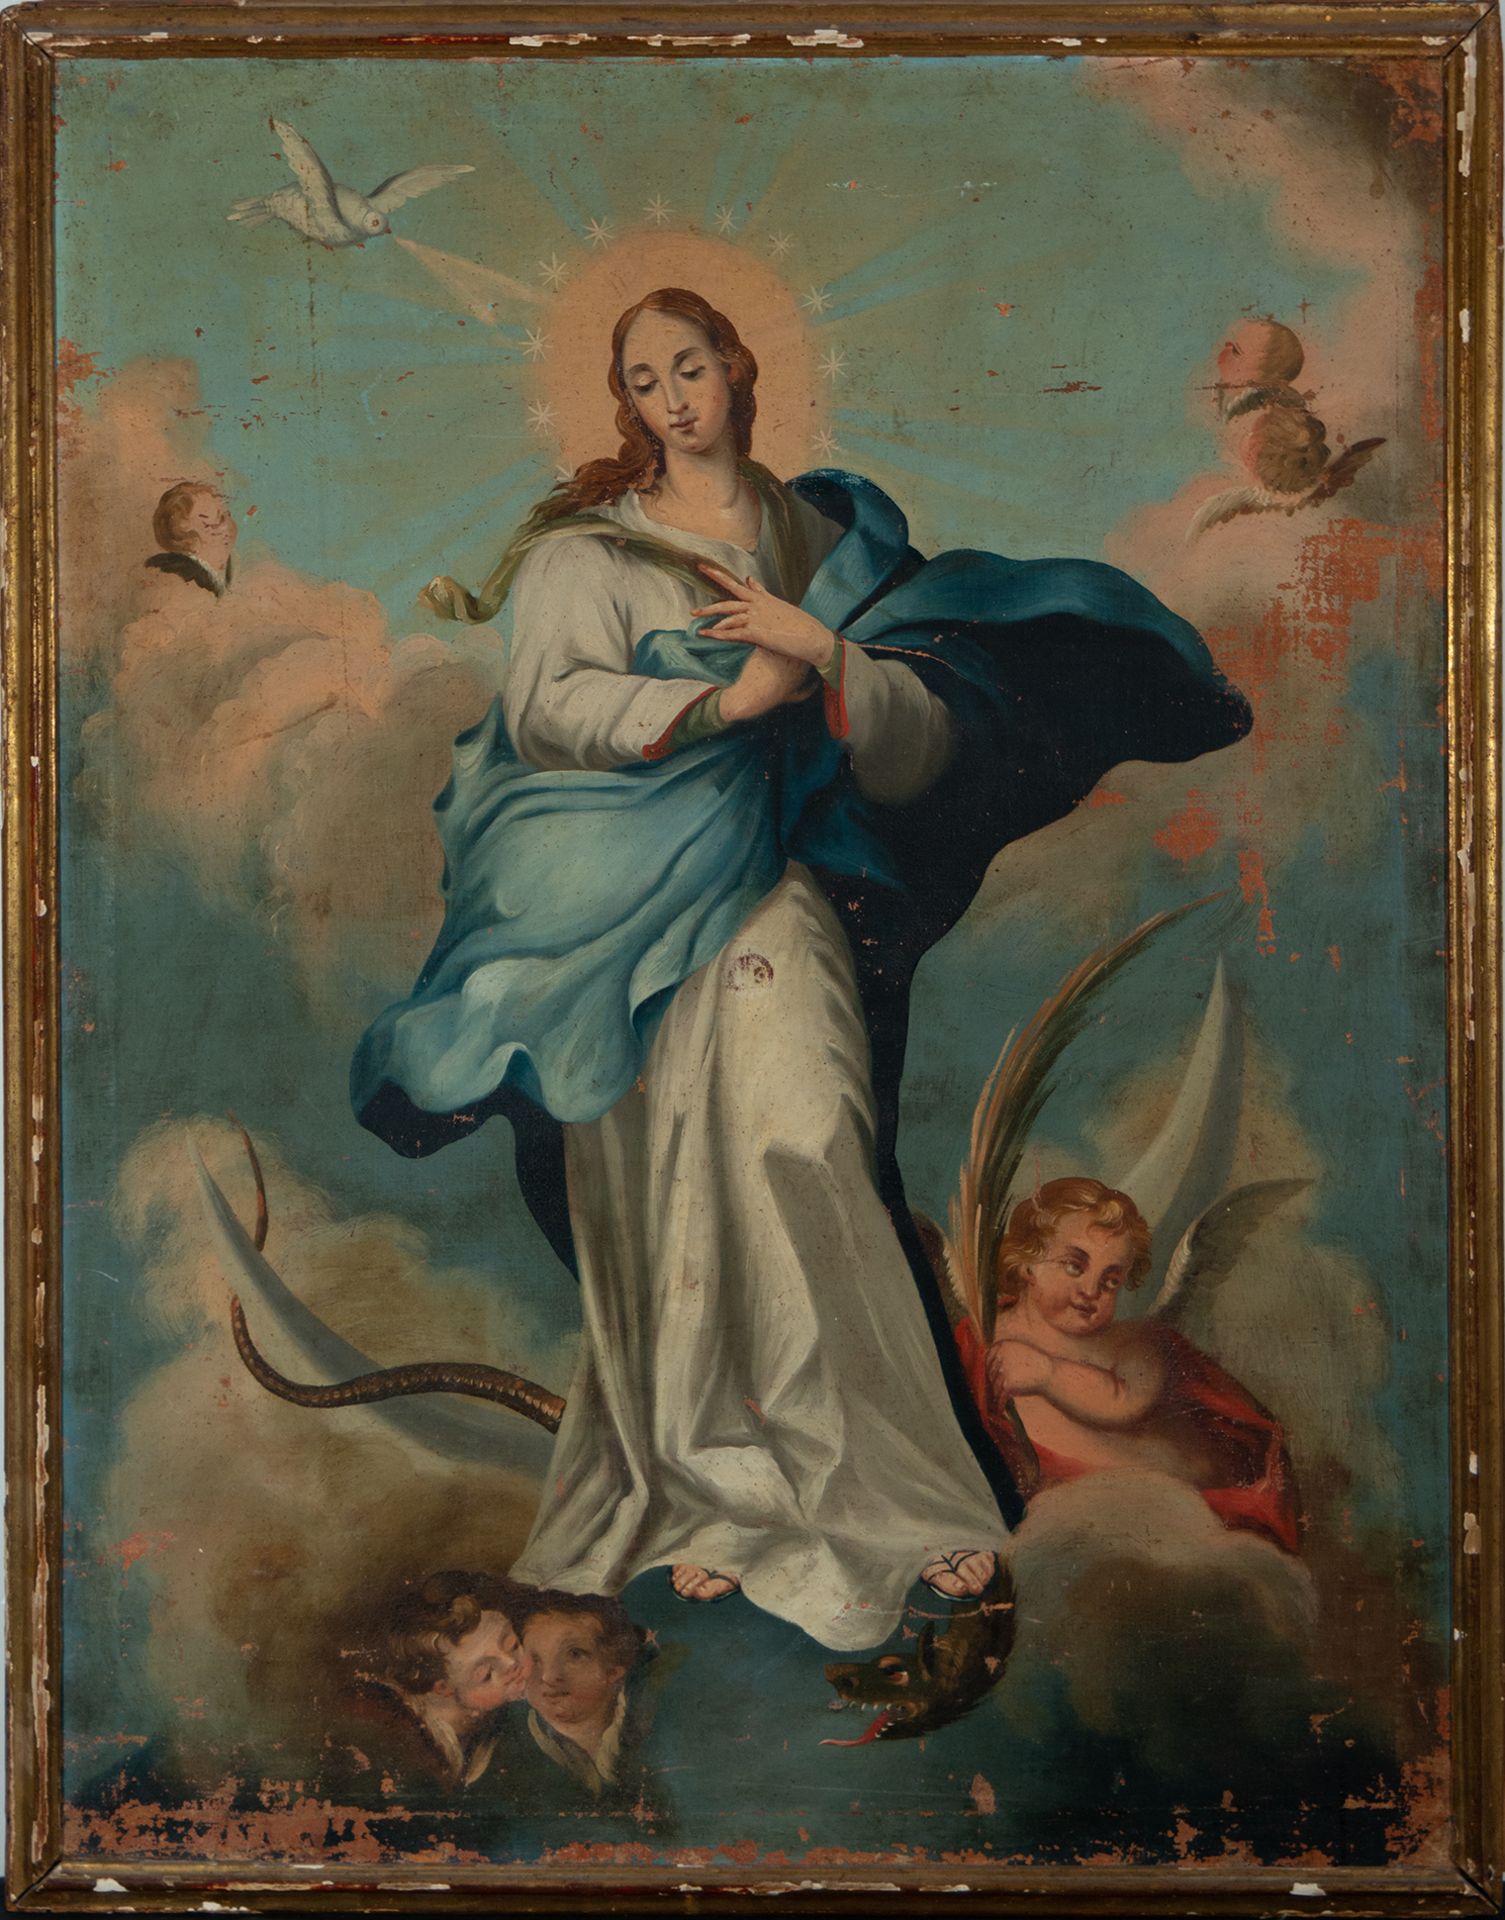 Immaculate Virgin, 18th century Italian school